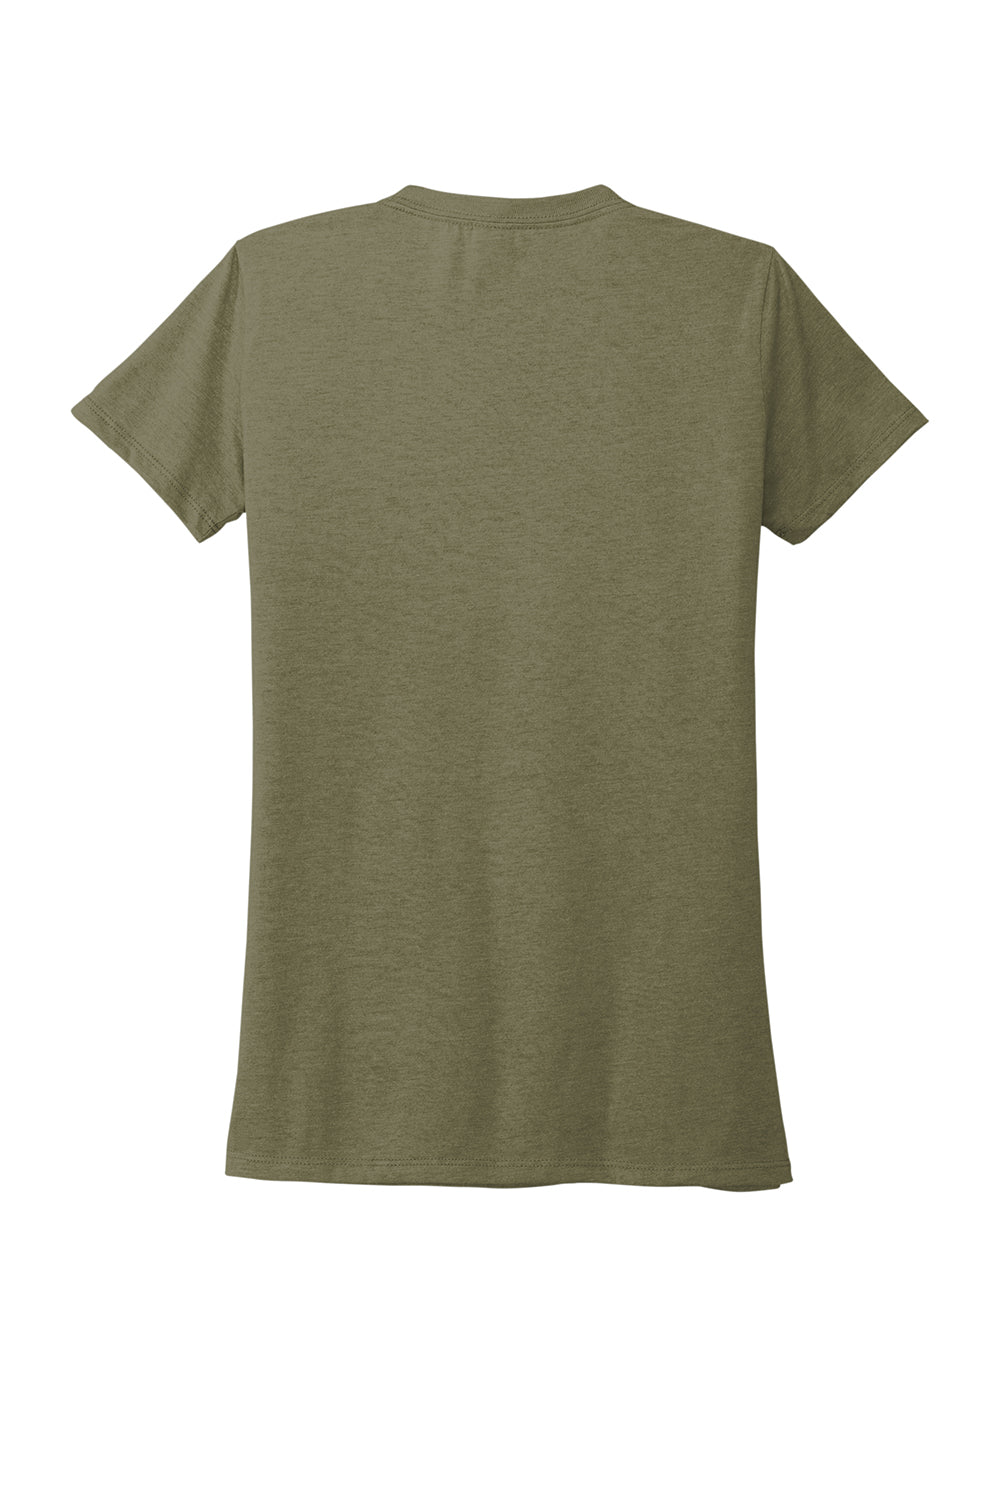 Allmade AL2008 Womens Short Sleeve Crewneck T-Shirt Olive You Green Flat Back